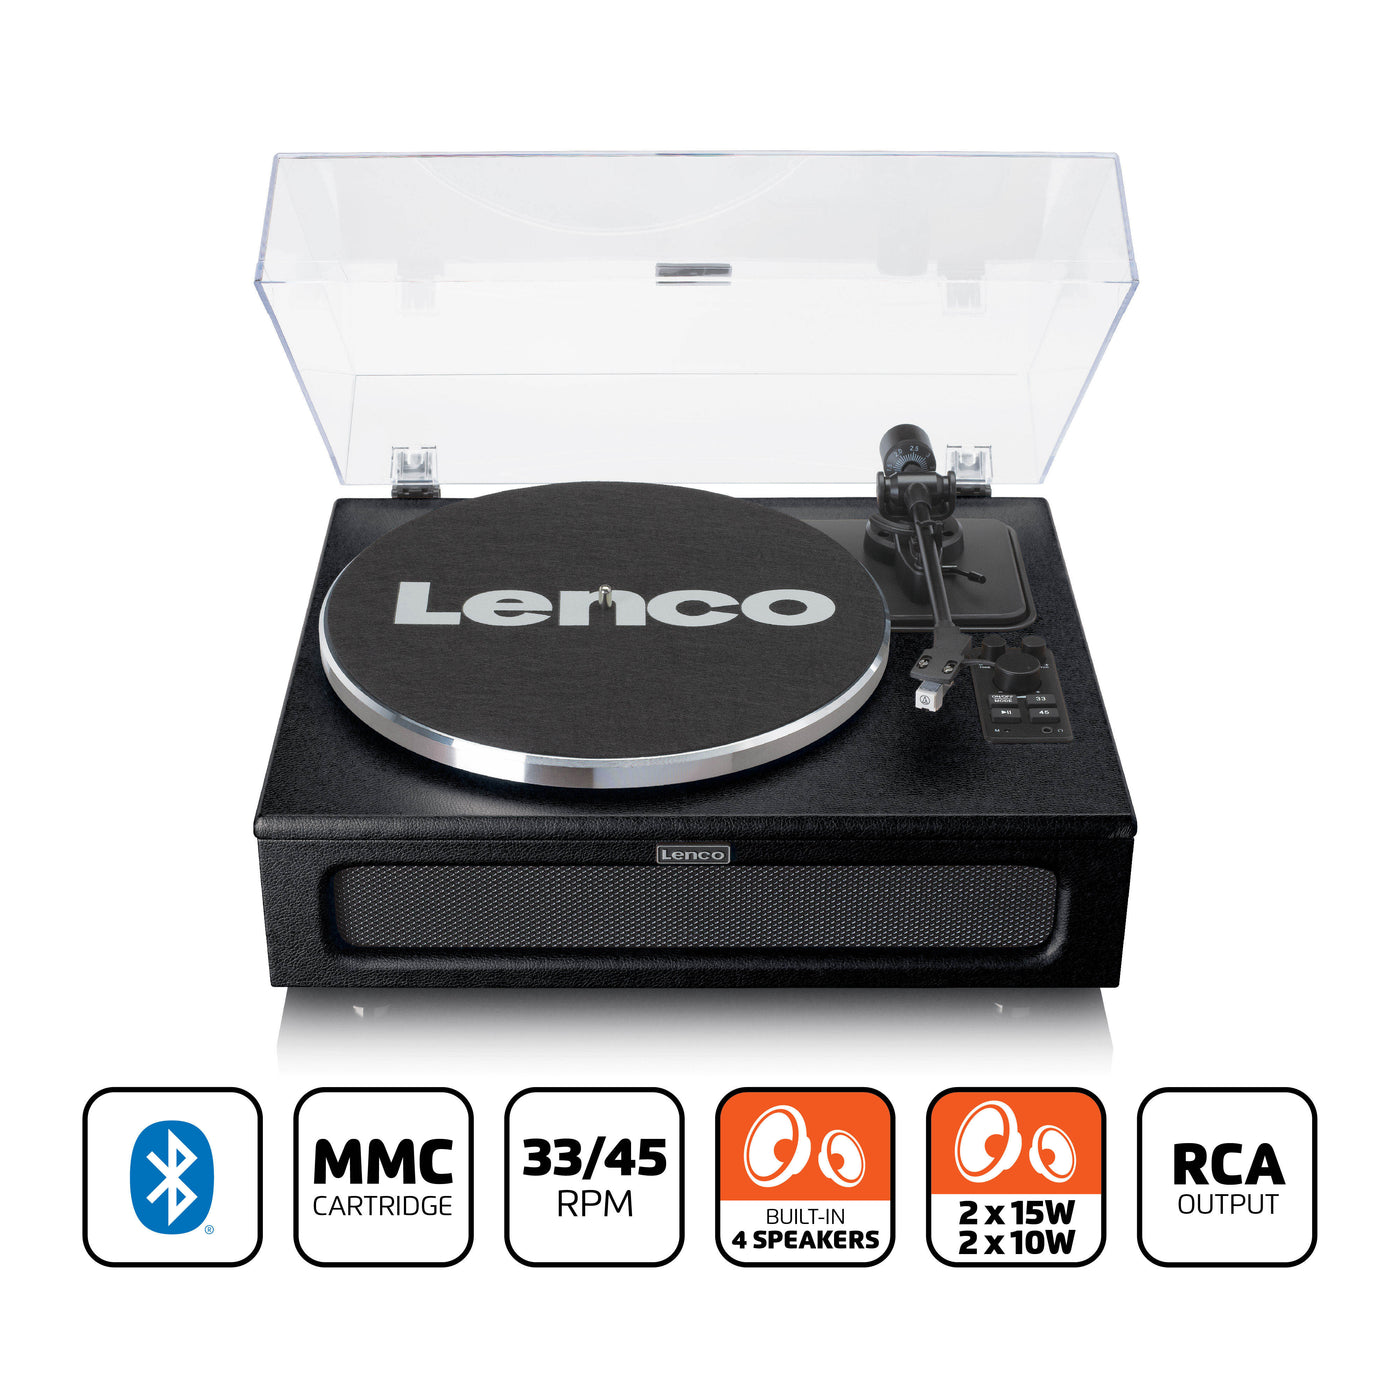 LENCO LS-430BK - Turntable with 4 built-in speakers - Black